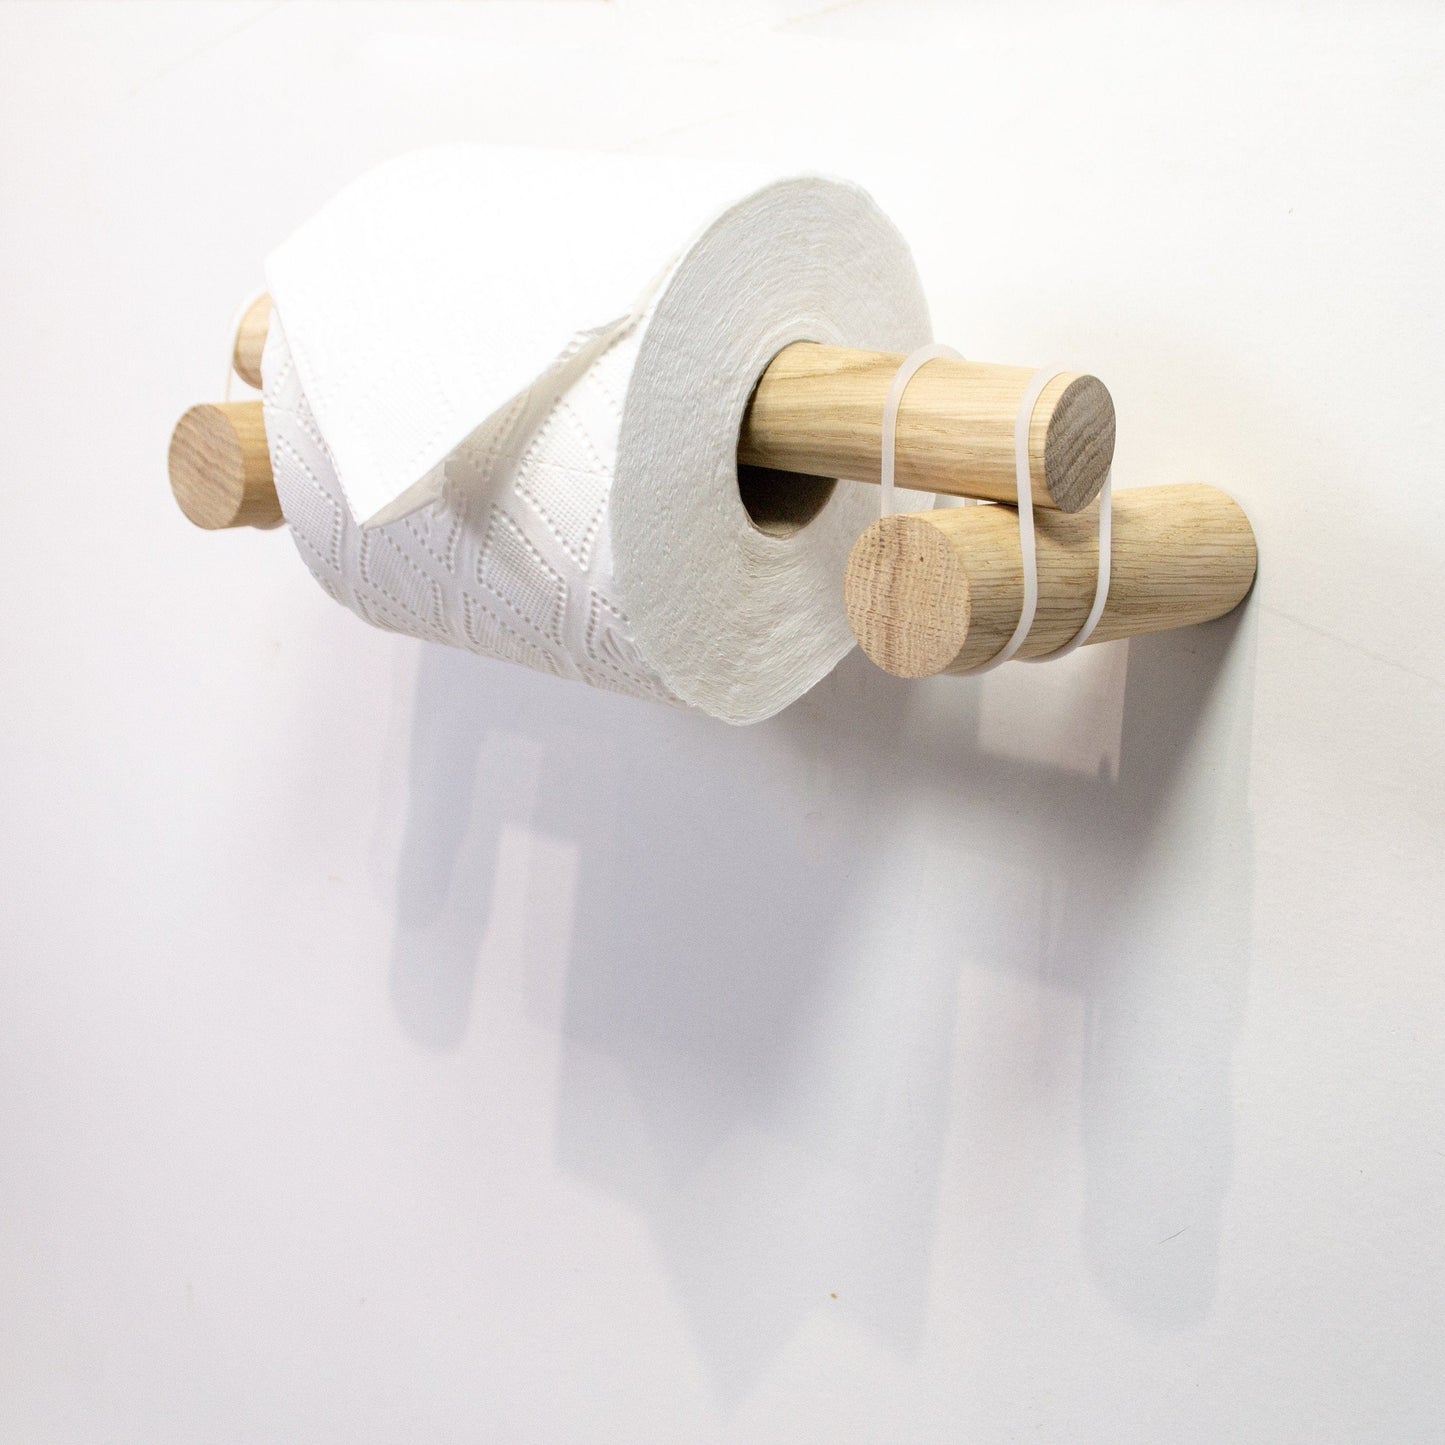 Wooden Toilet Roll Holder, minimal wall mount toilet paper holder